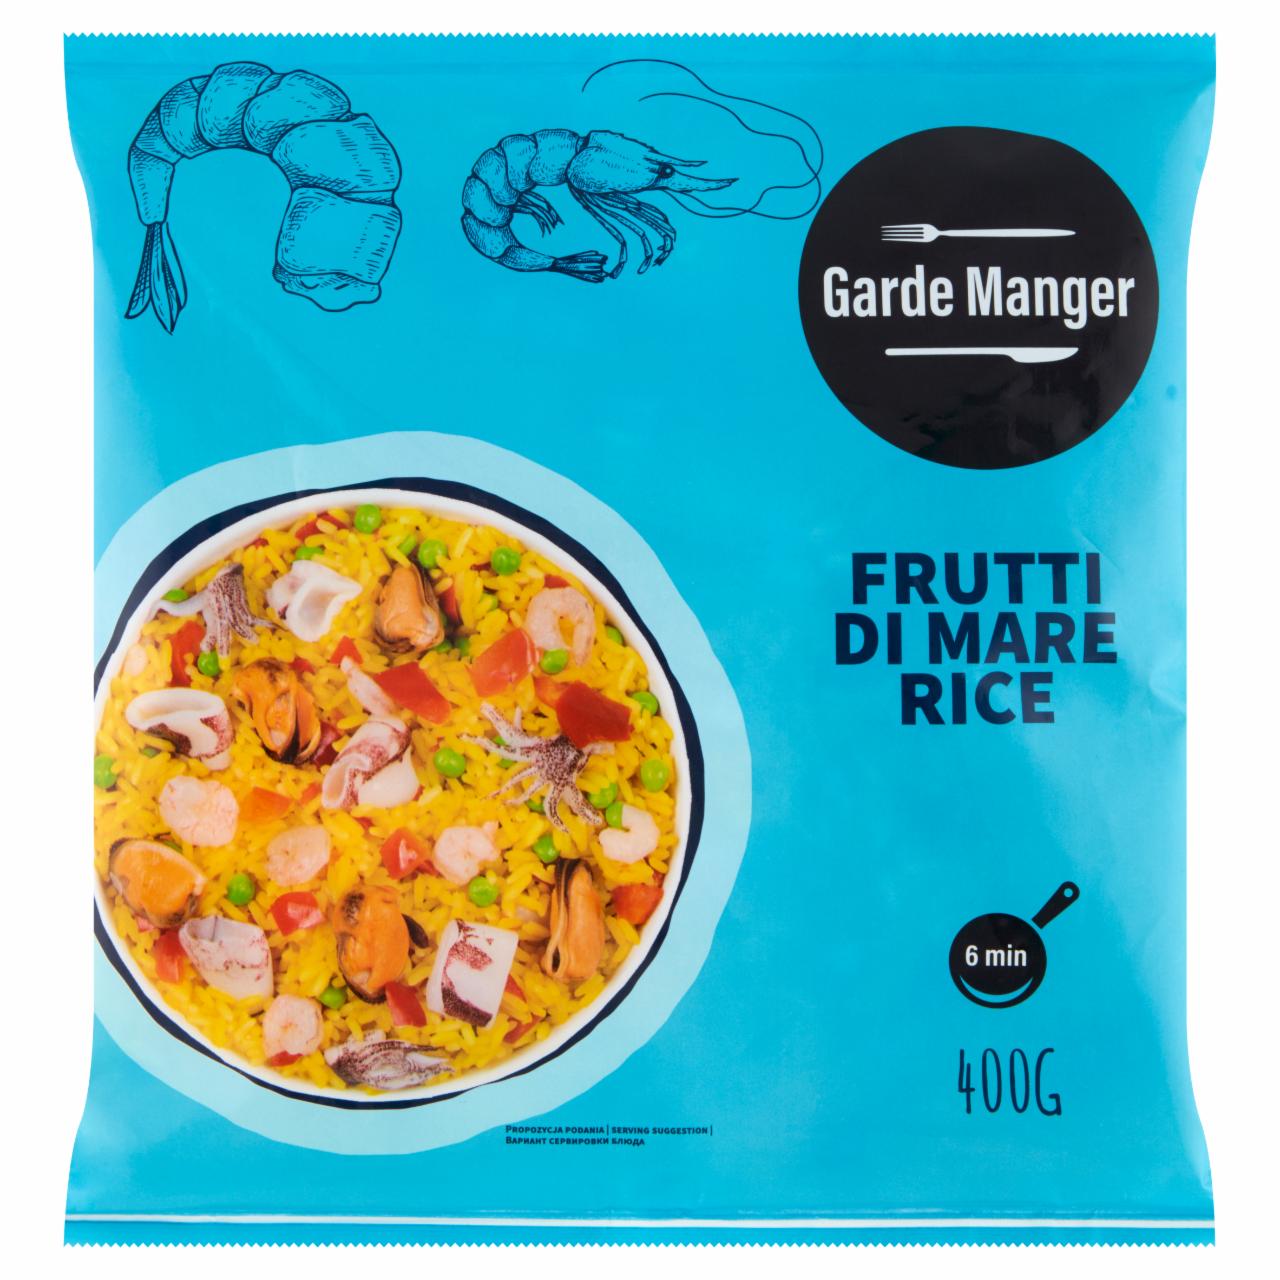 Фото - Рис з морепродуктами Frutti di mare rice Garde Manger